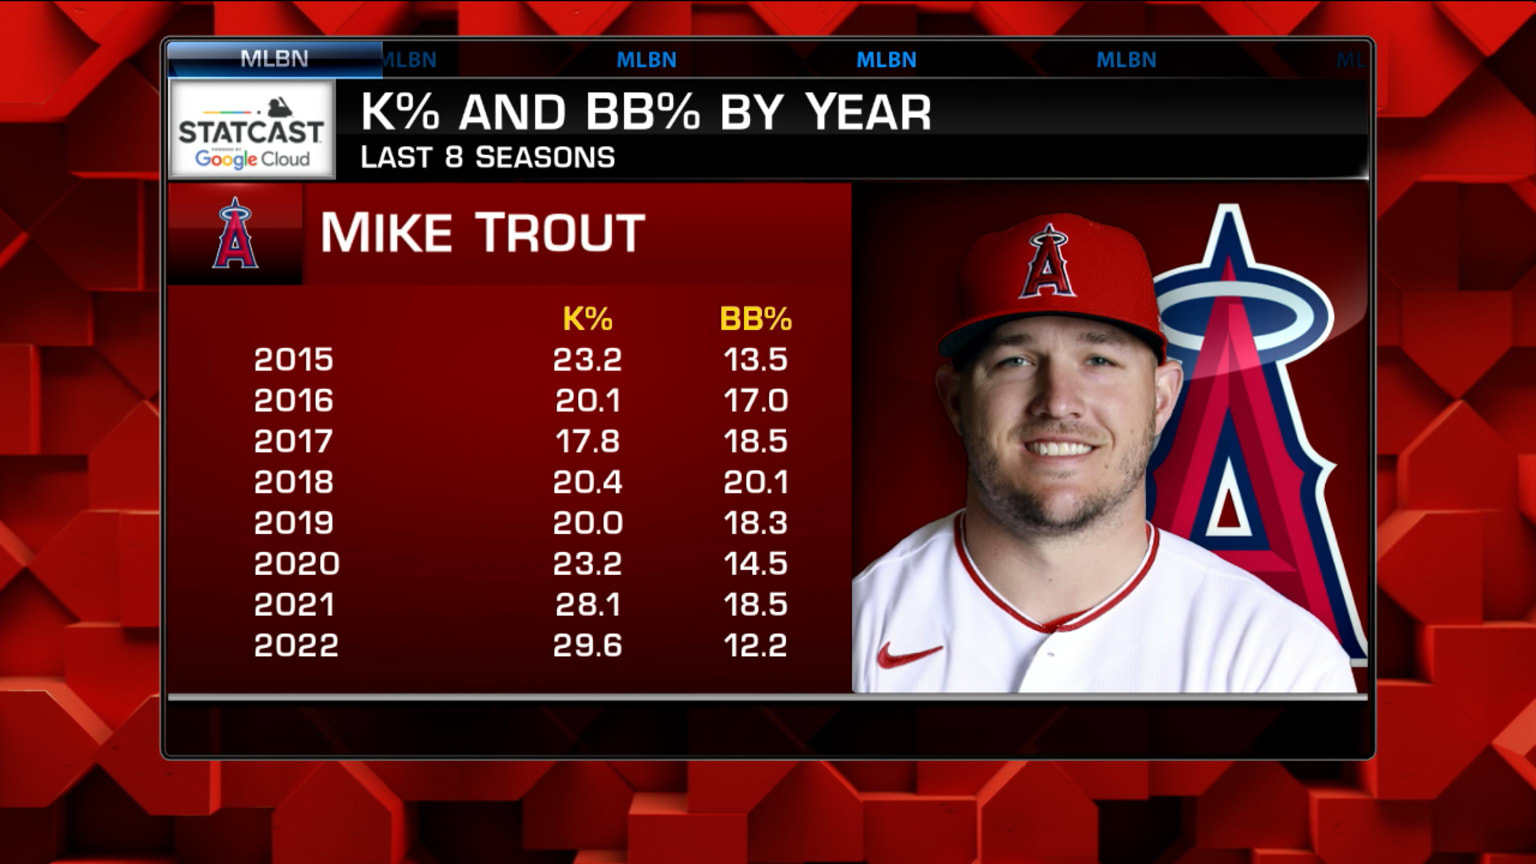 Mike Trout: Baseball News, Stats & Analysis